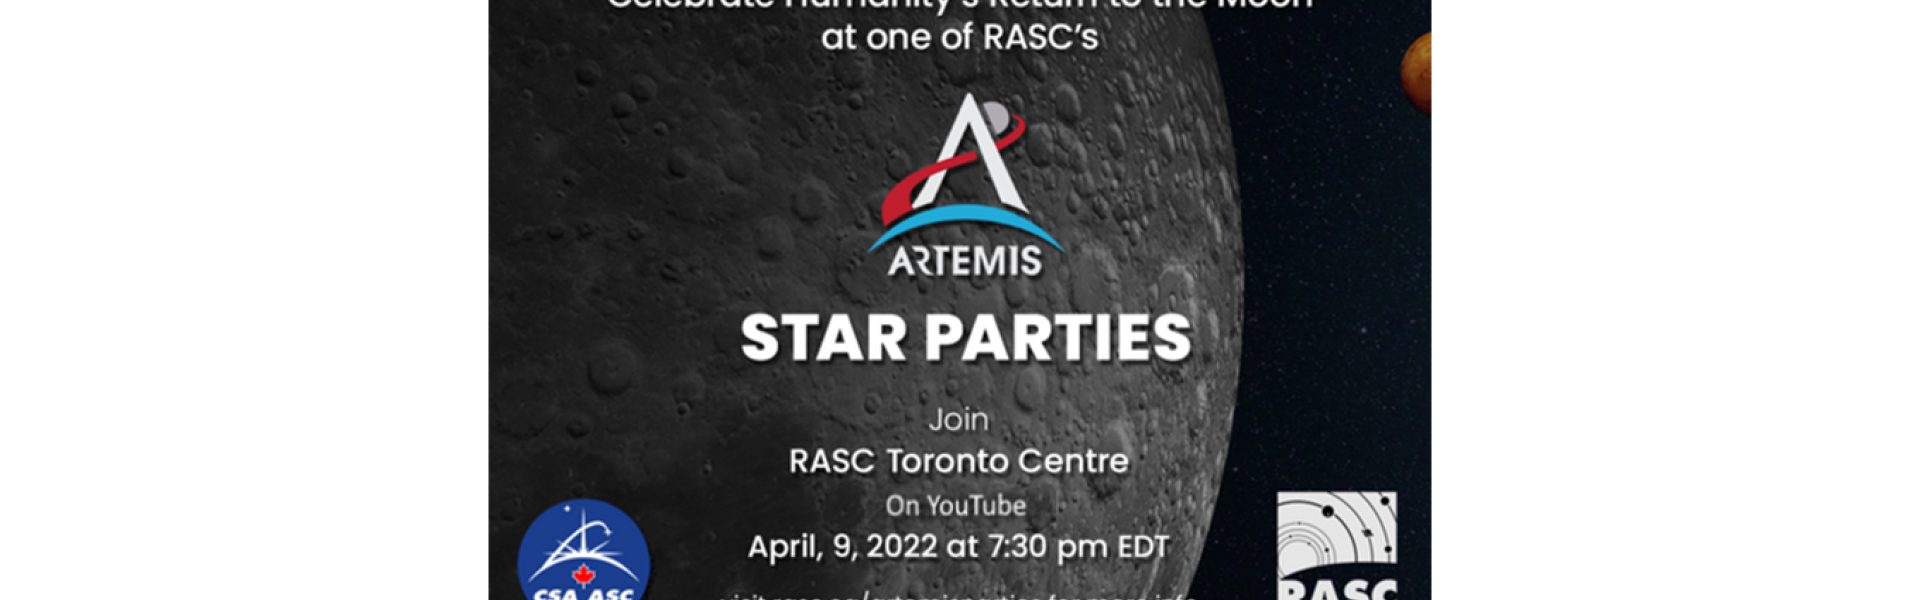 Artemis Star Parties